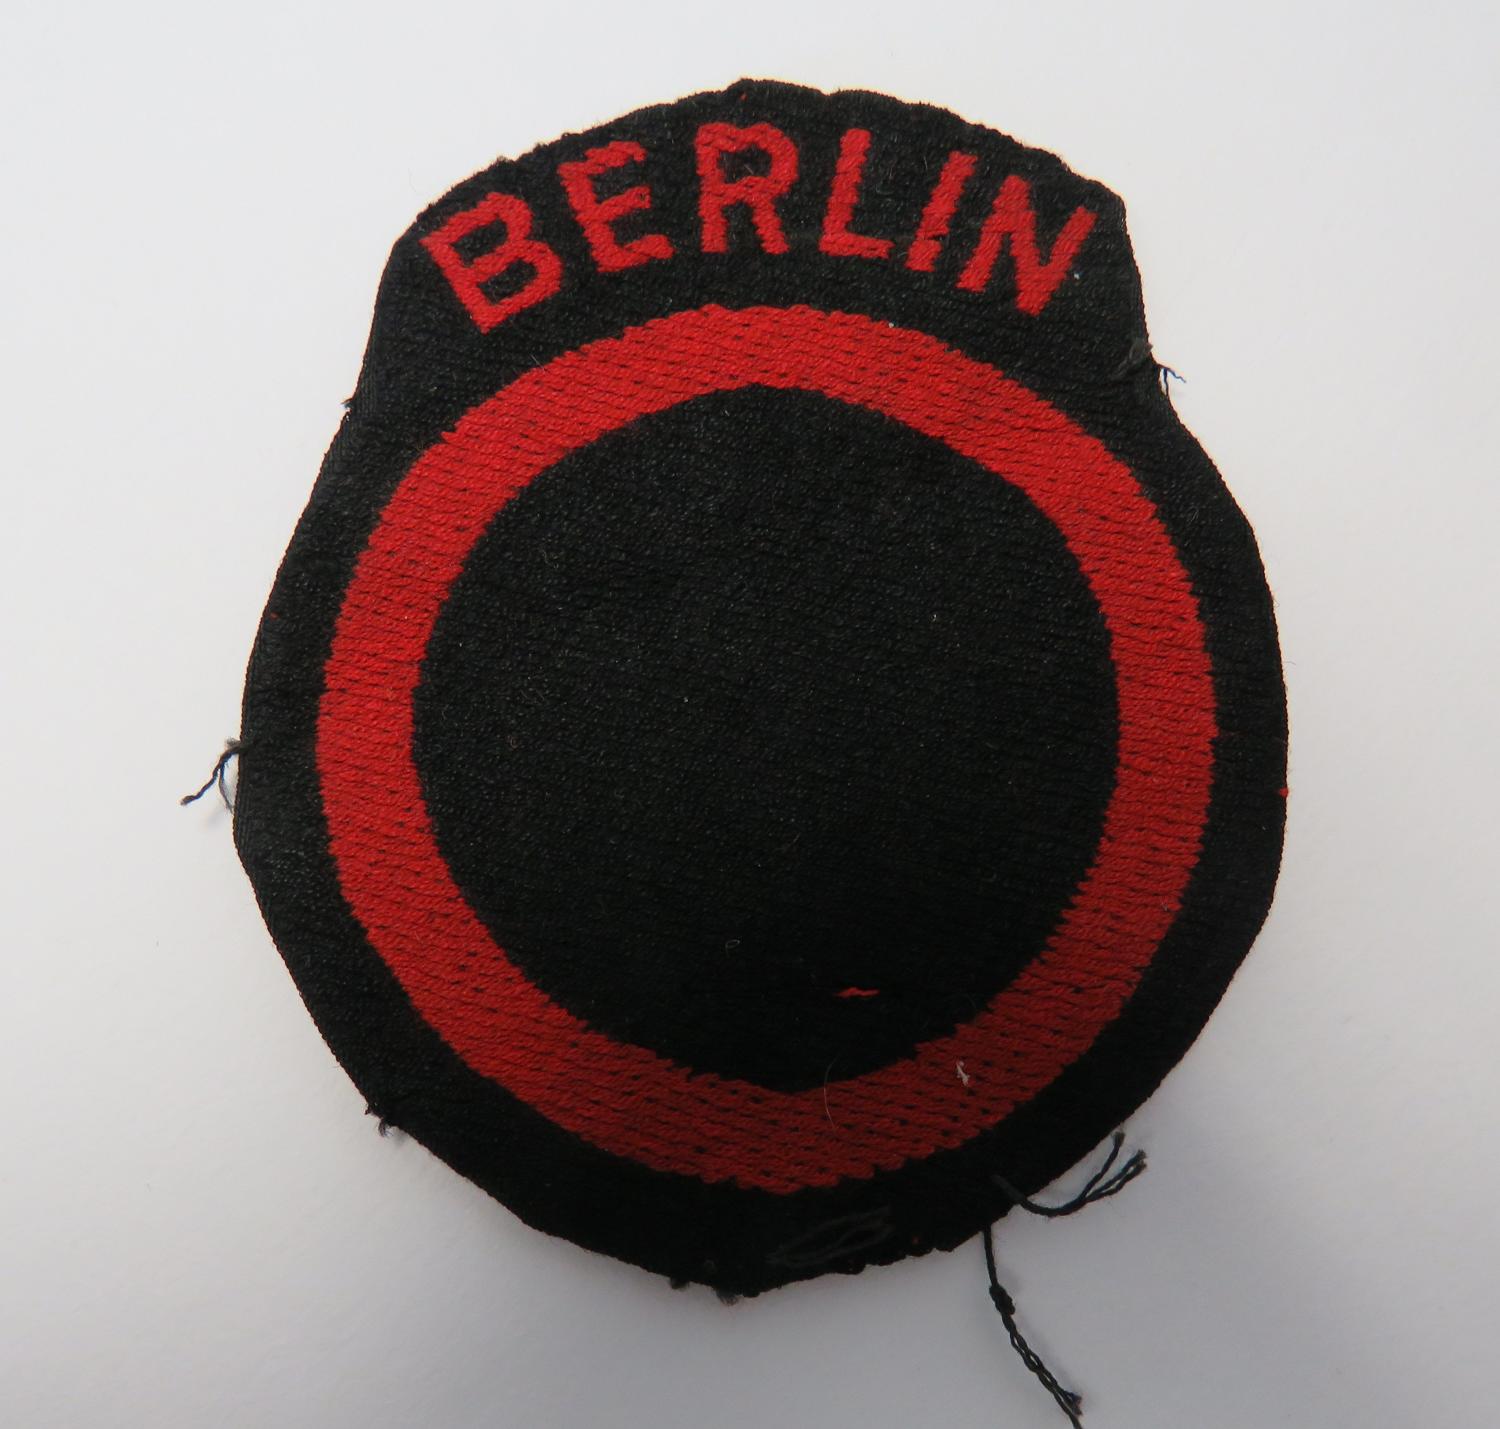 Berlin Troops Formation Badge